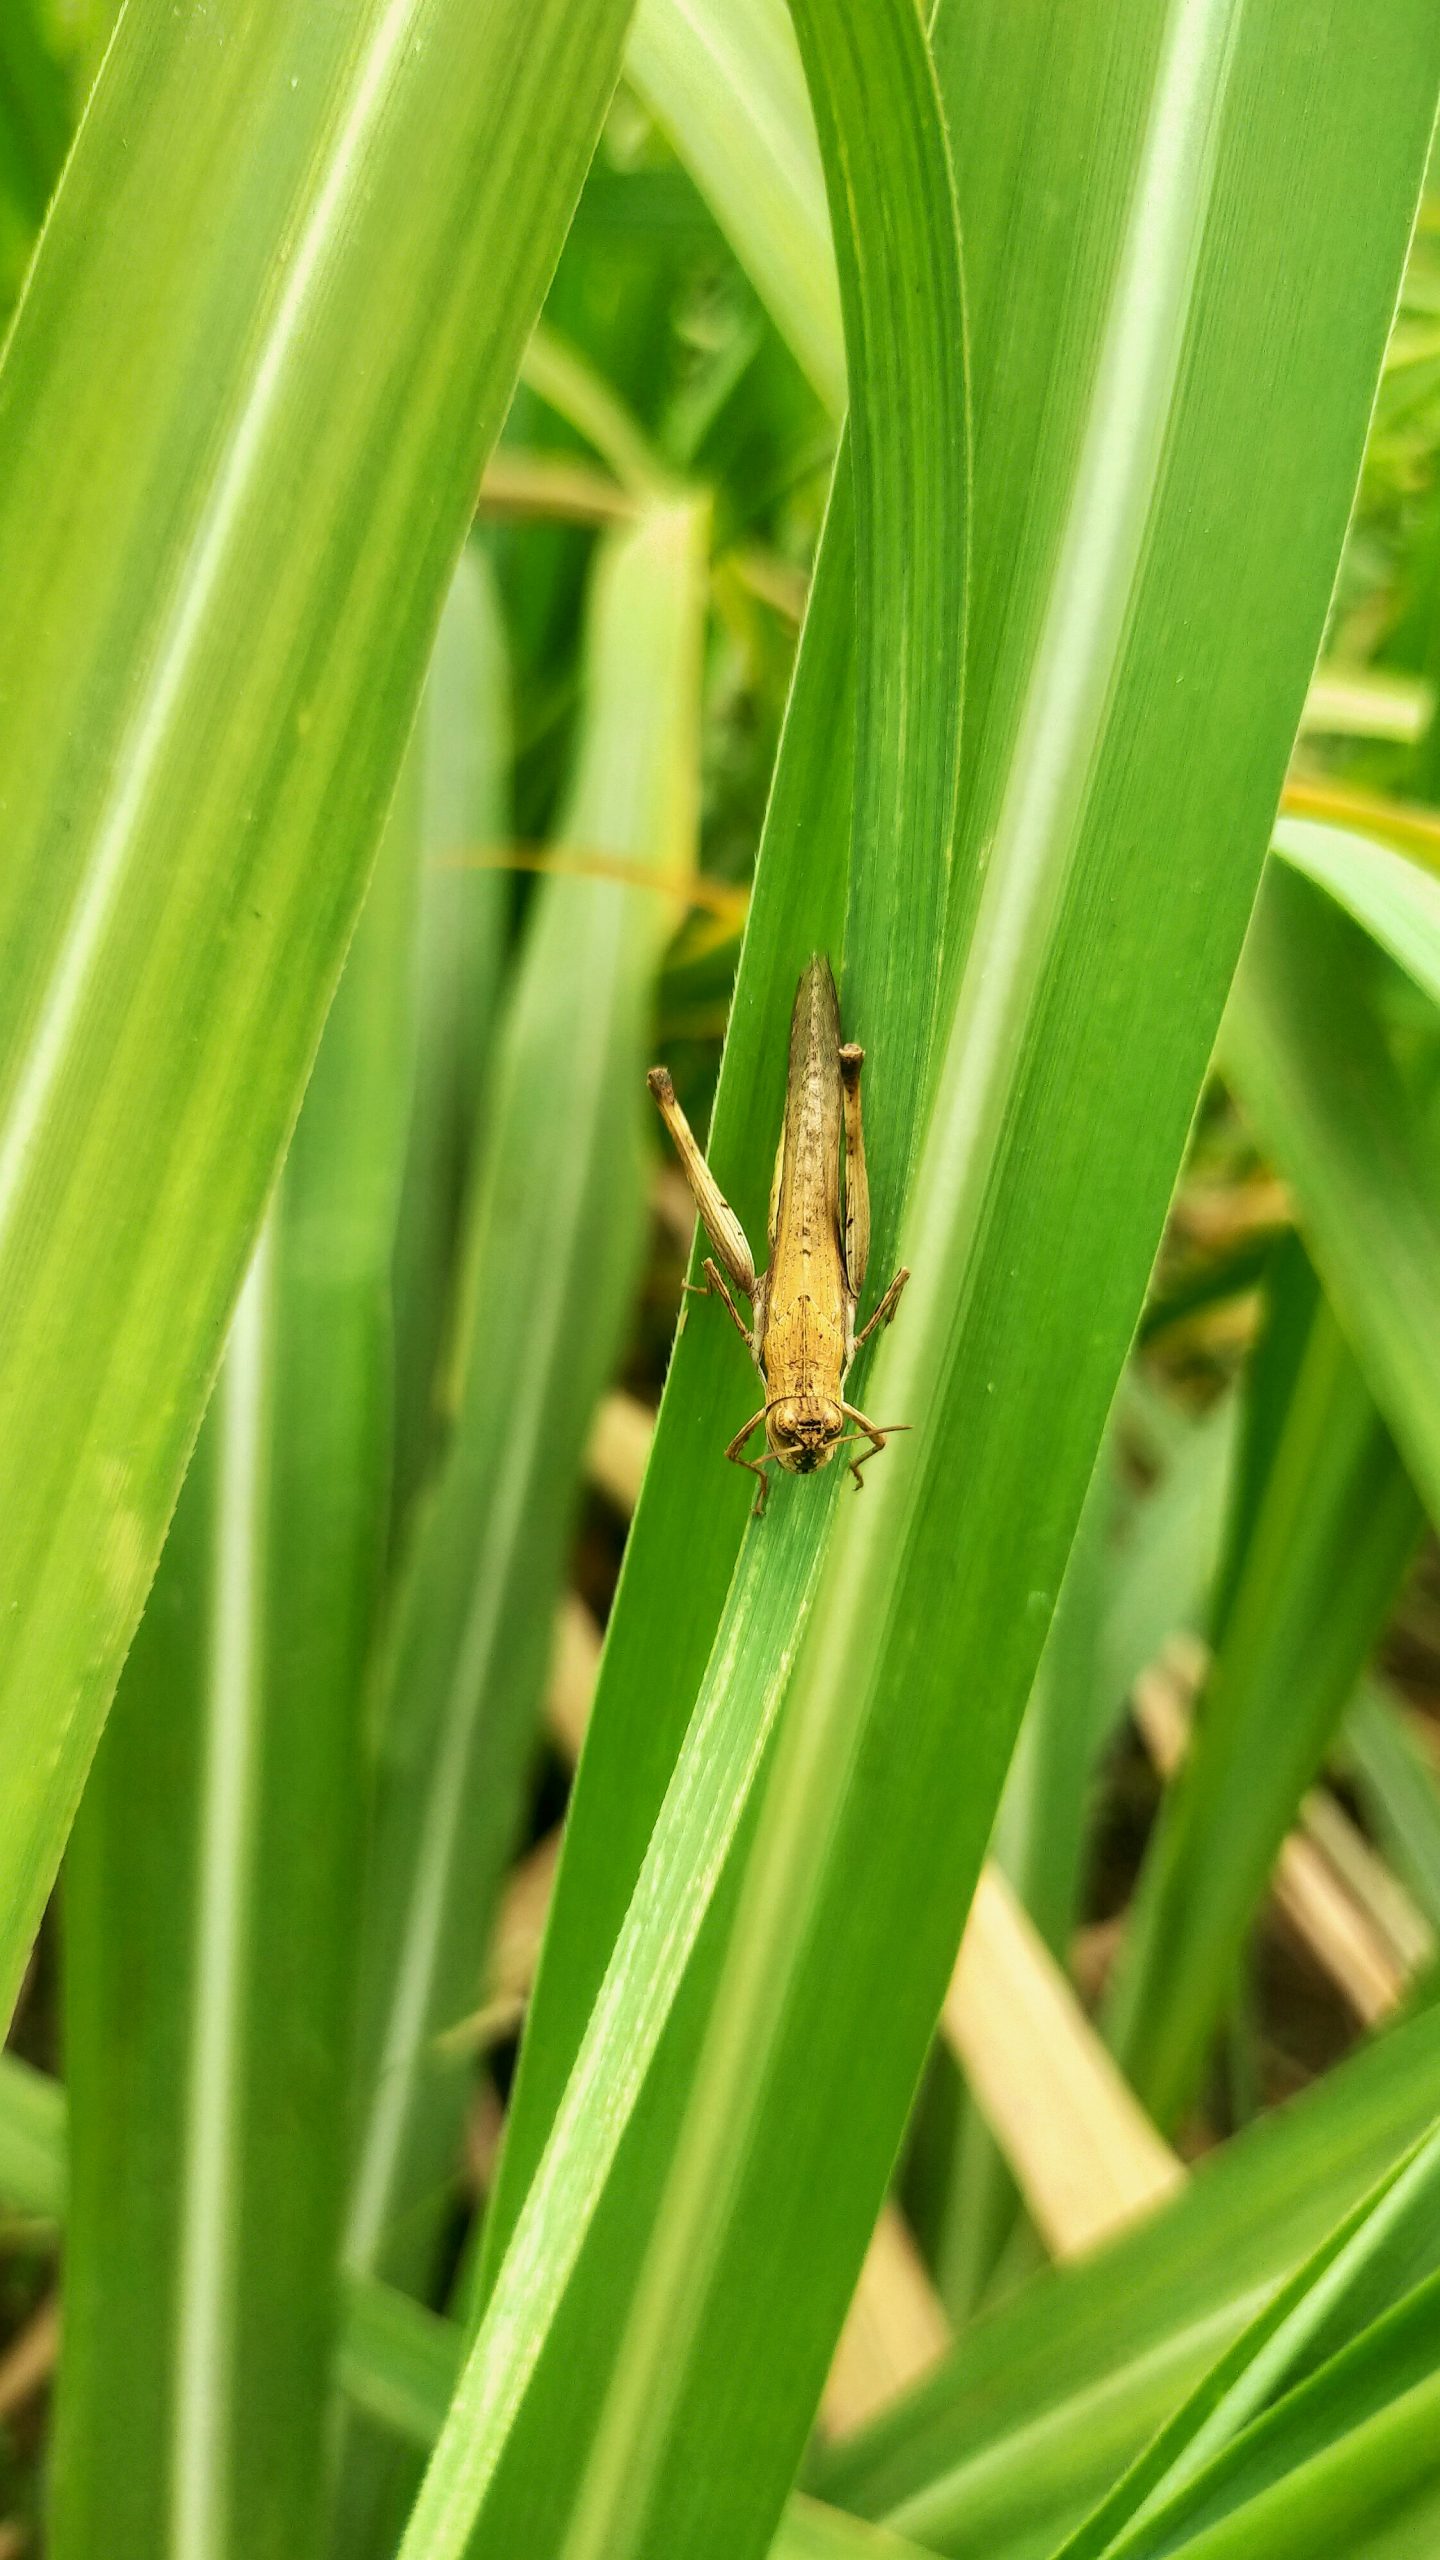 Grasshopper on the leaf